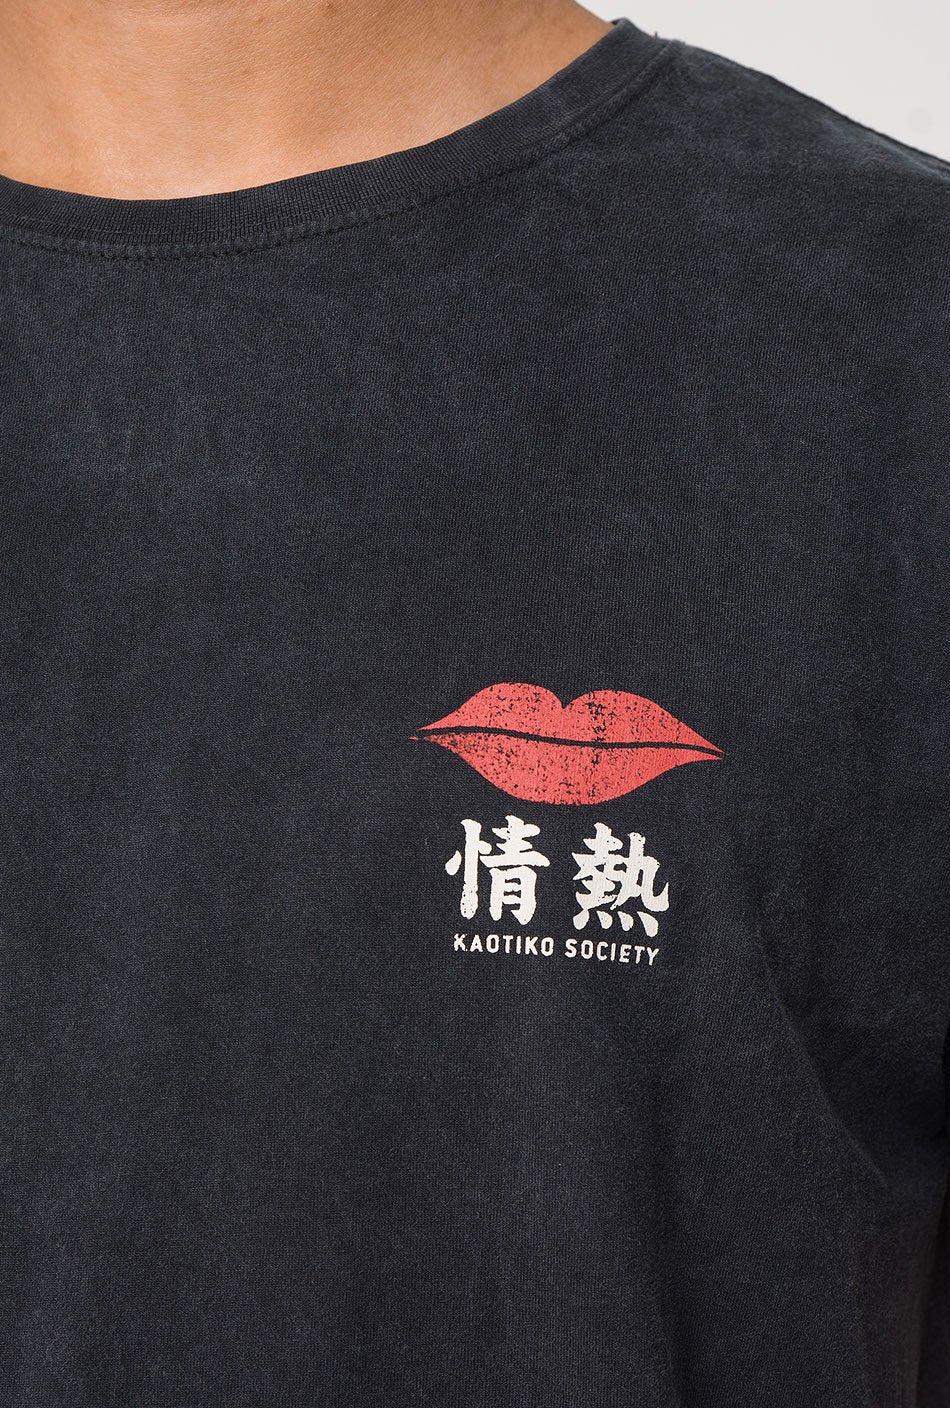 Camiseta Tie-Dye Lips Japan Negra